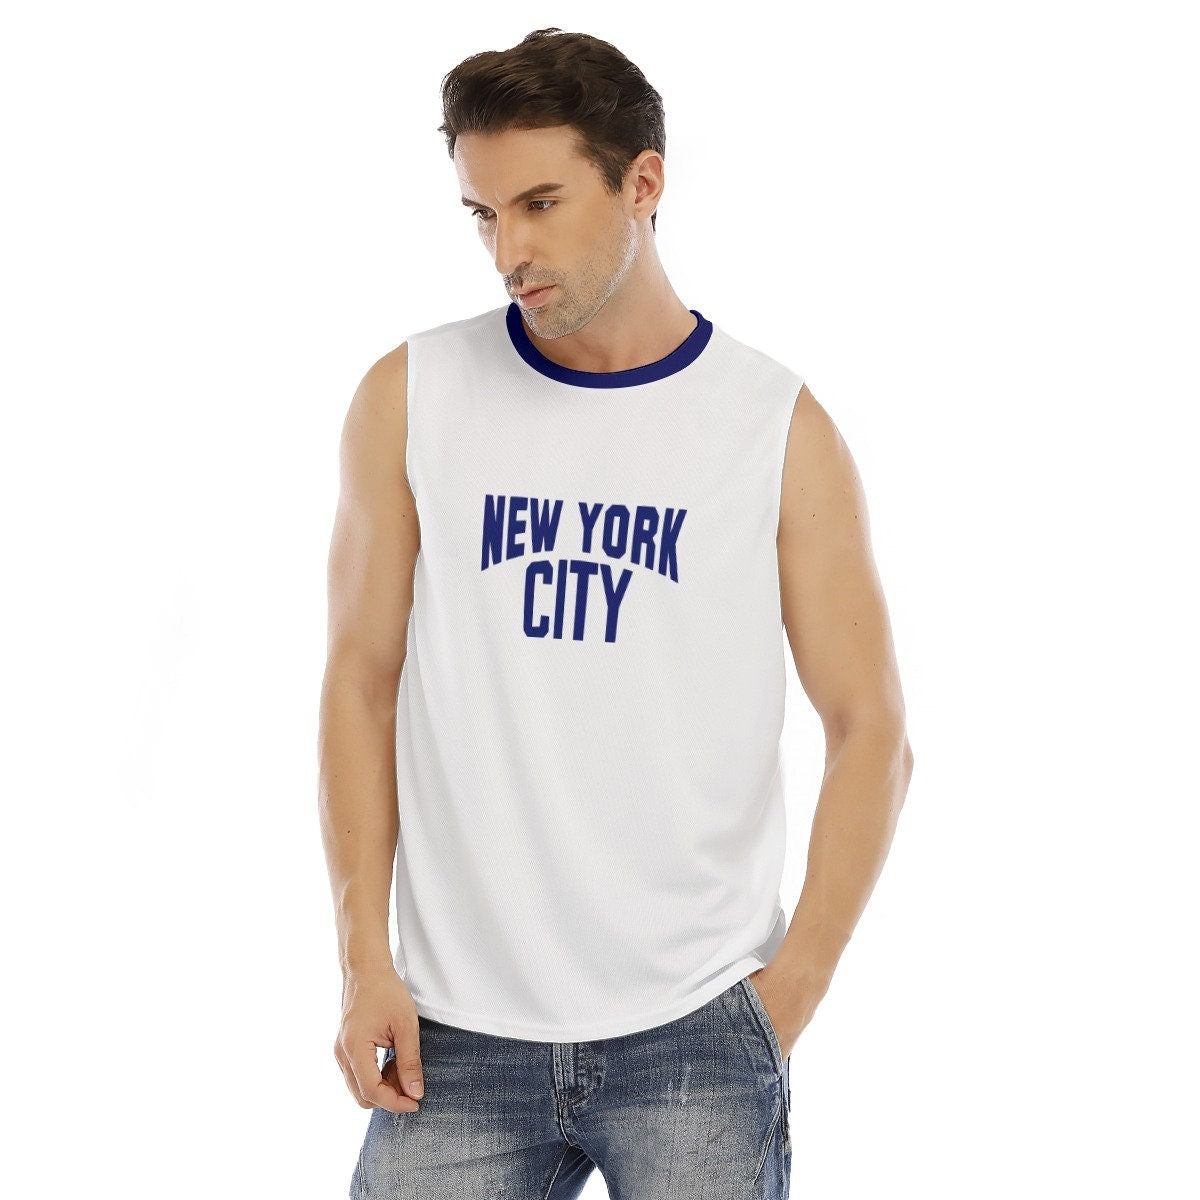 New York City John Lennon Tank Top Shirt